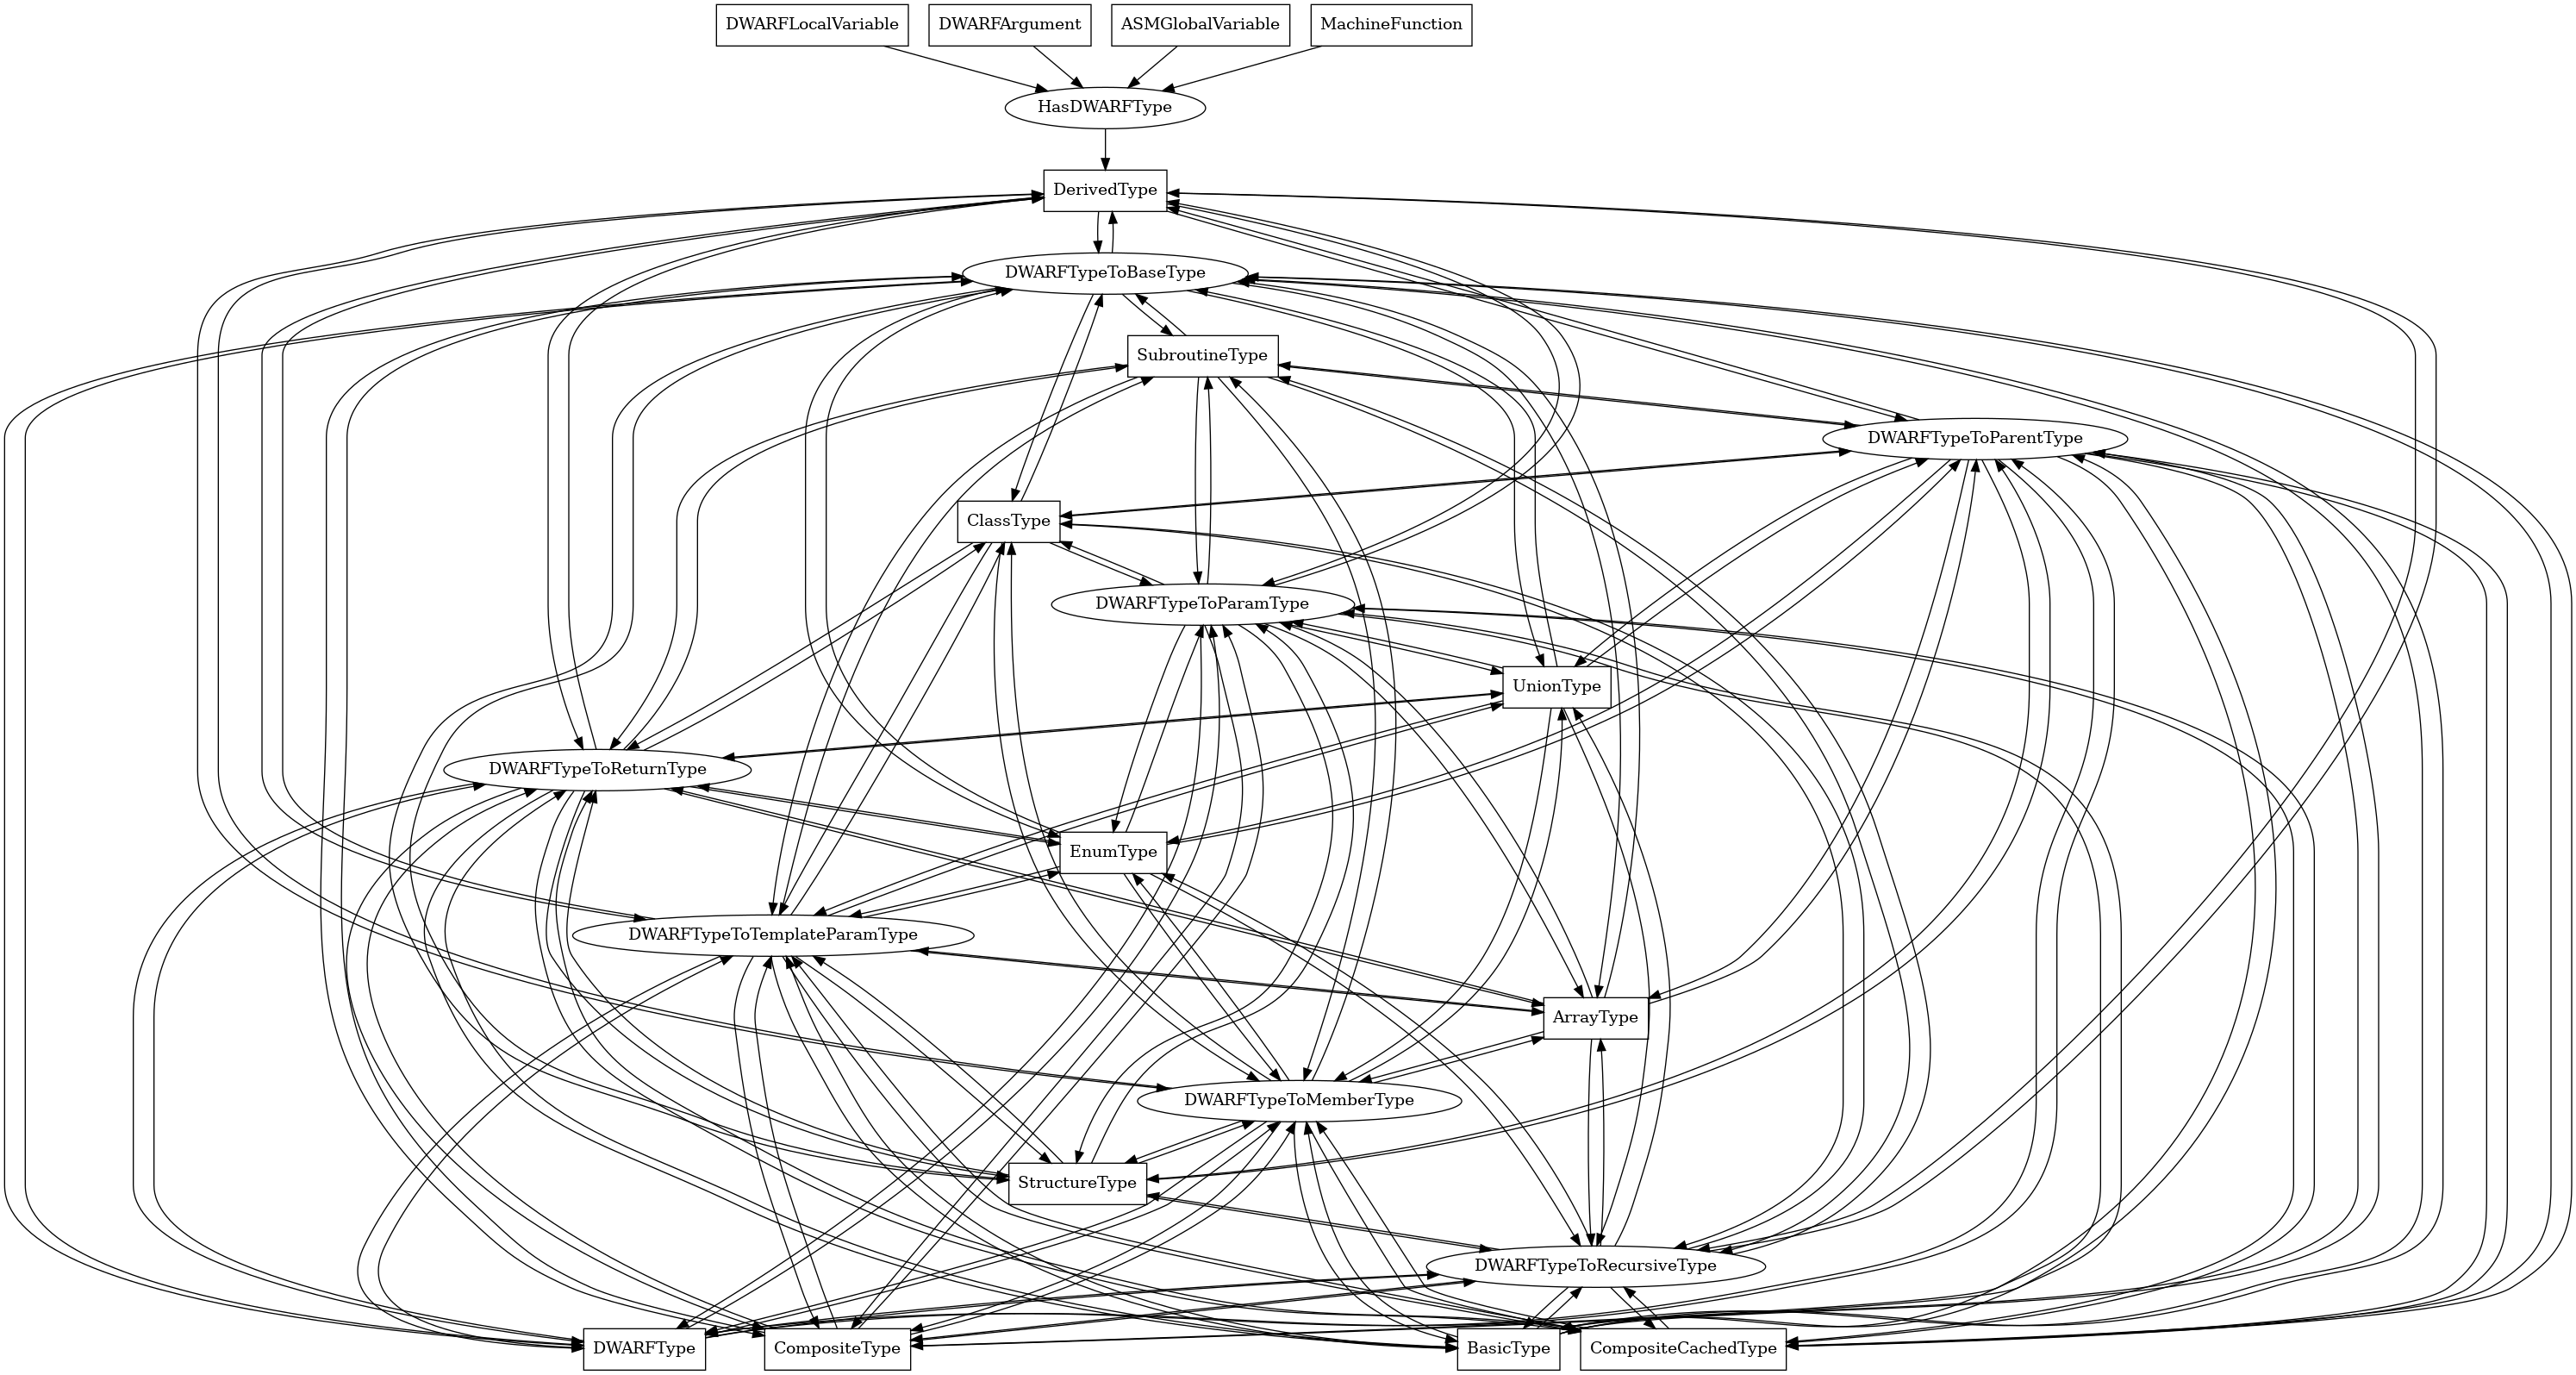 Entity-relationship diagram for DerivedType nodes